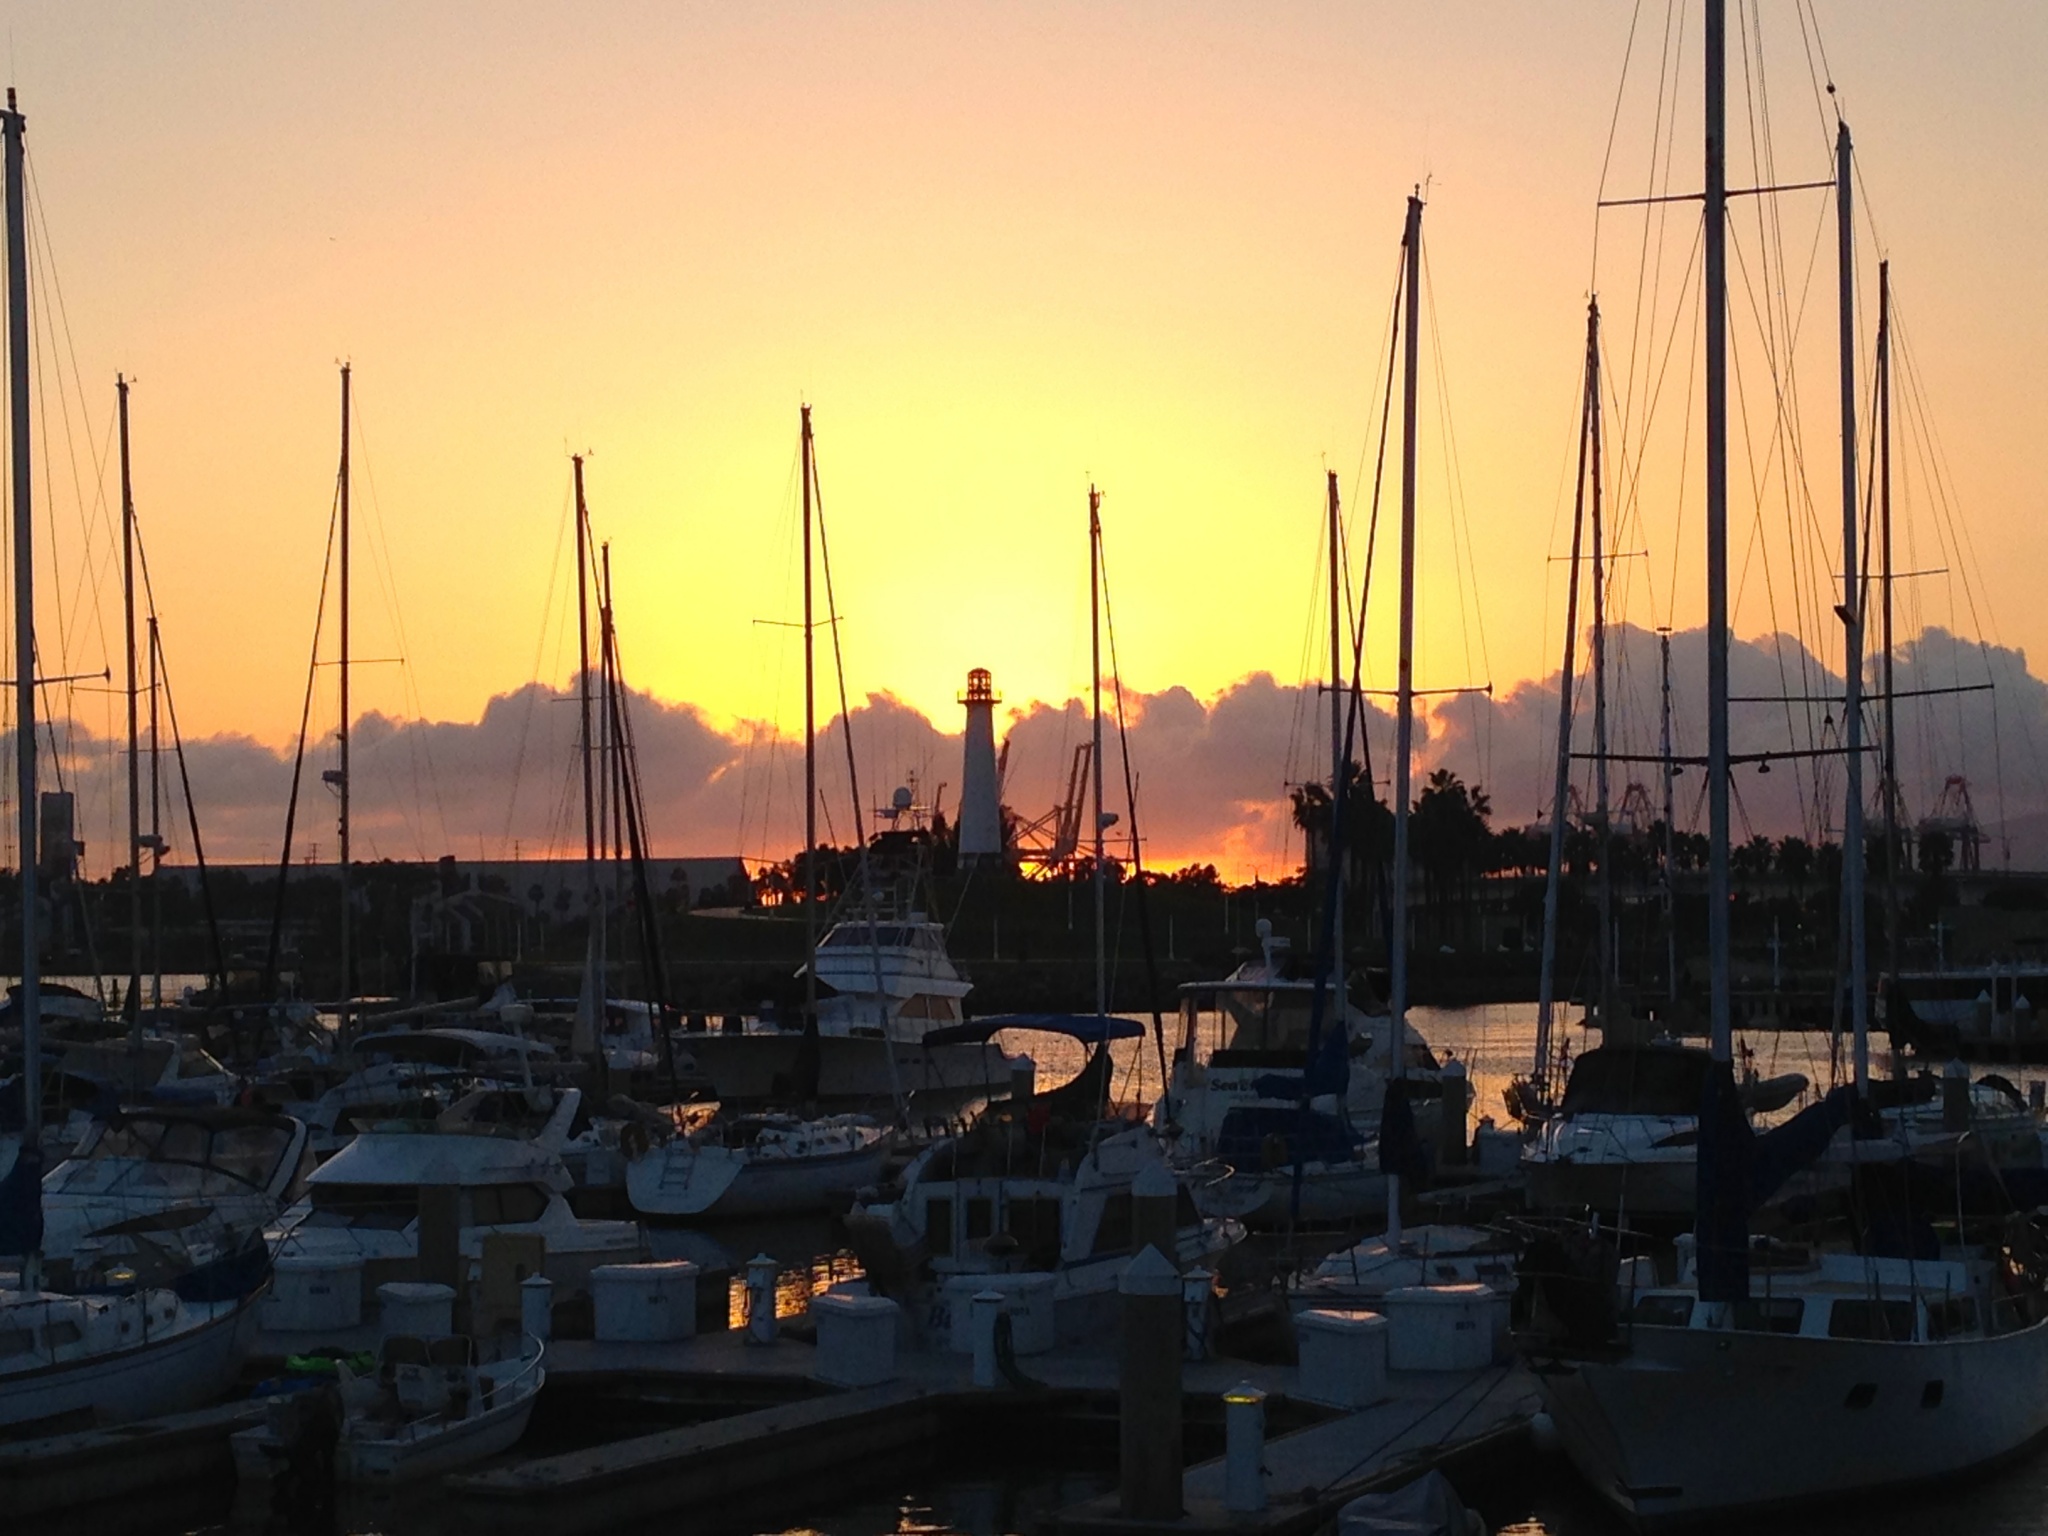 Sunset from Shoreline Village in Long Beach